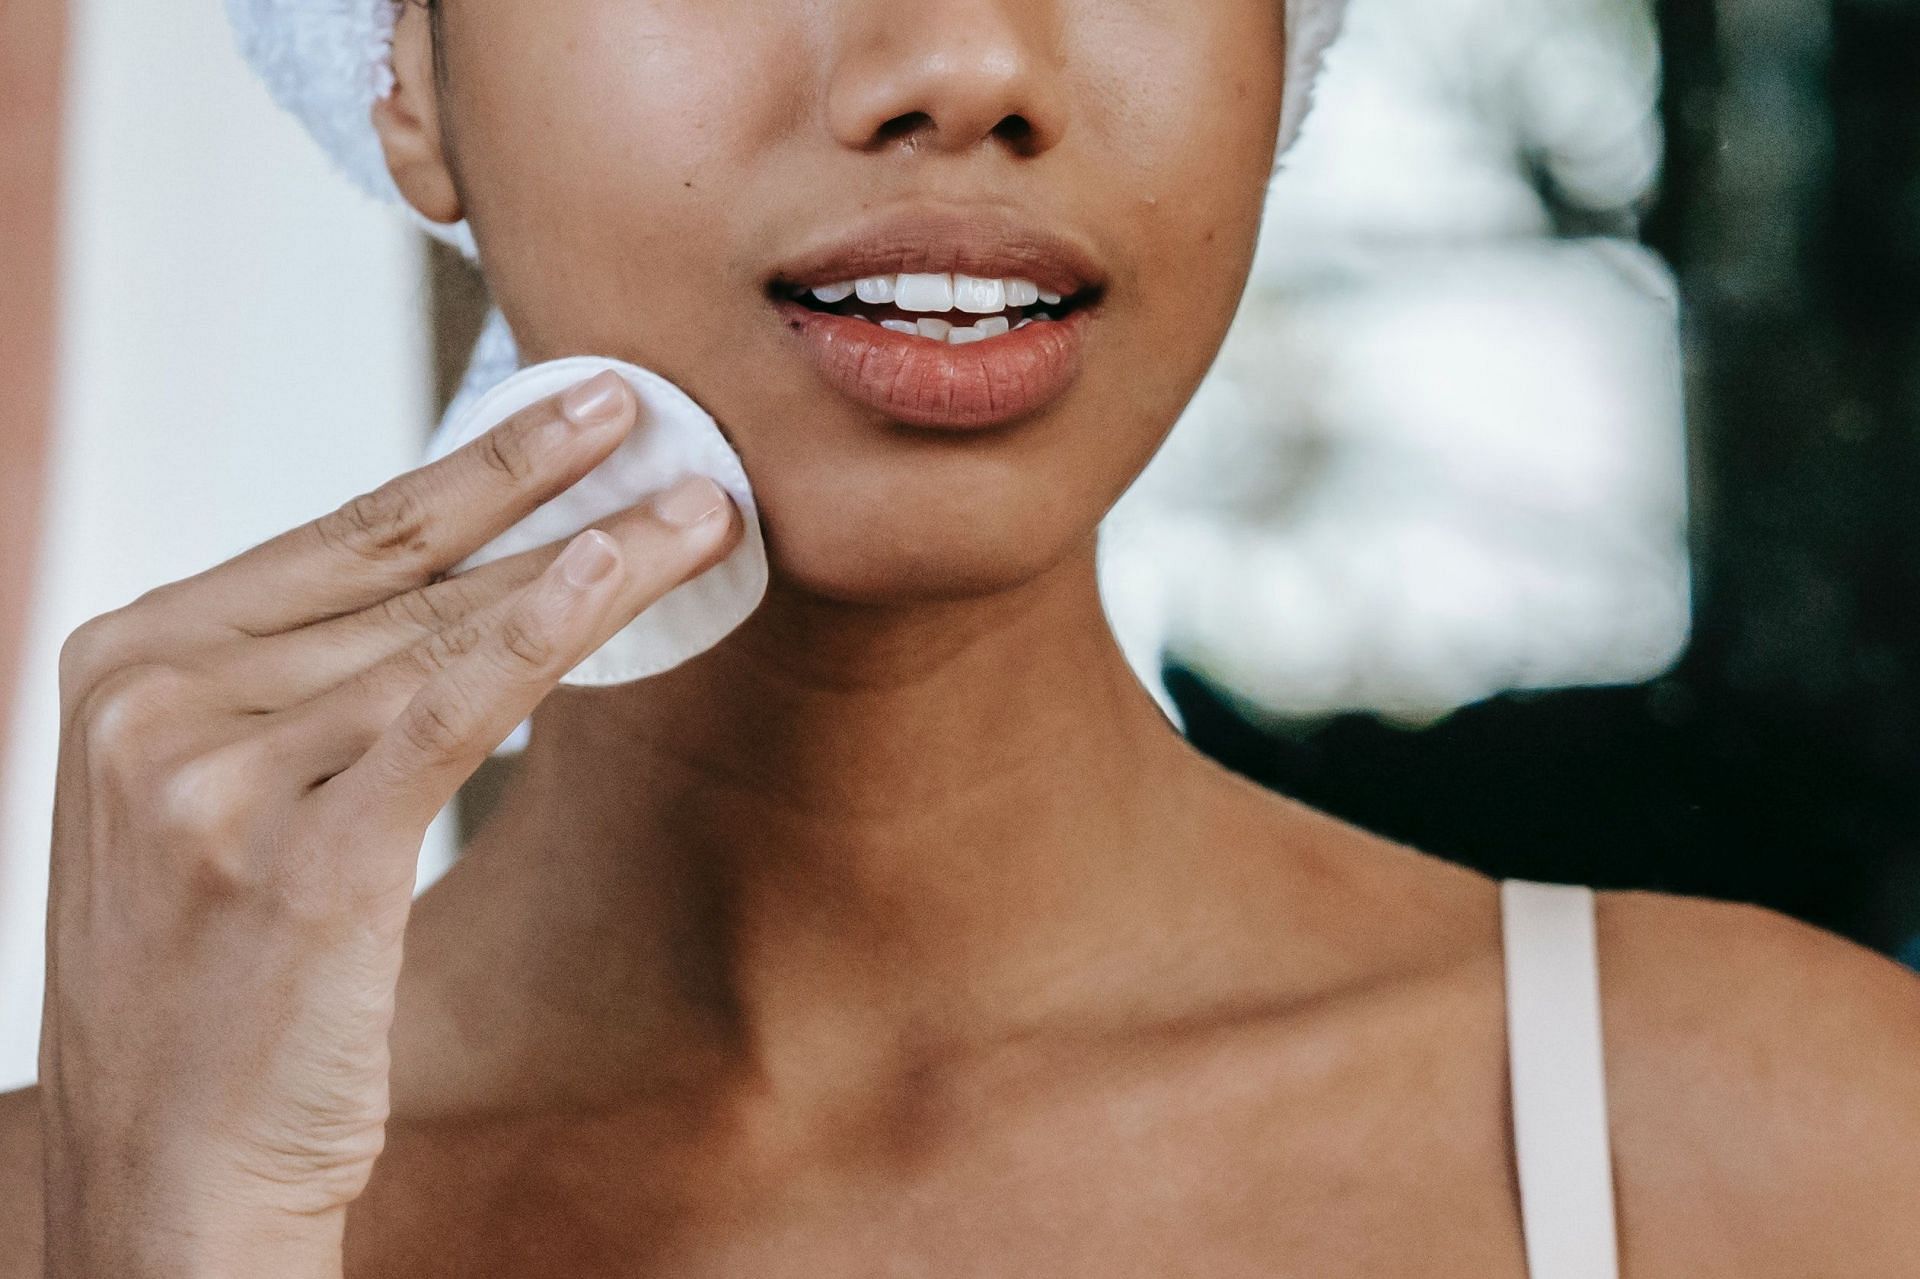 applying moisturiser can help reduce the rash. (Image via Pexels / Sora Shimazaki)